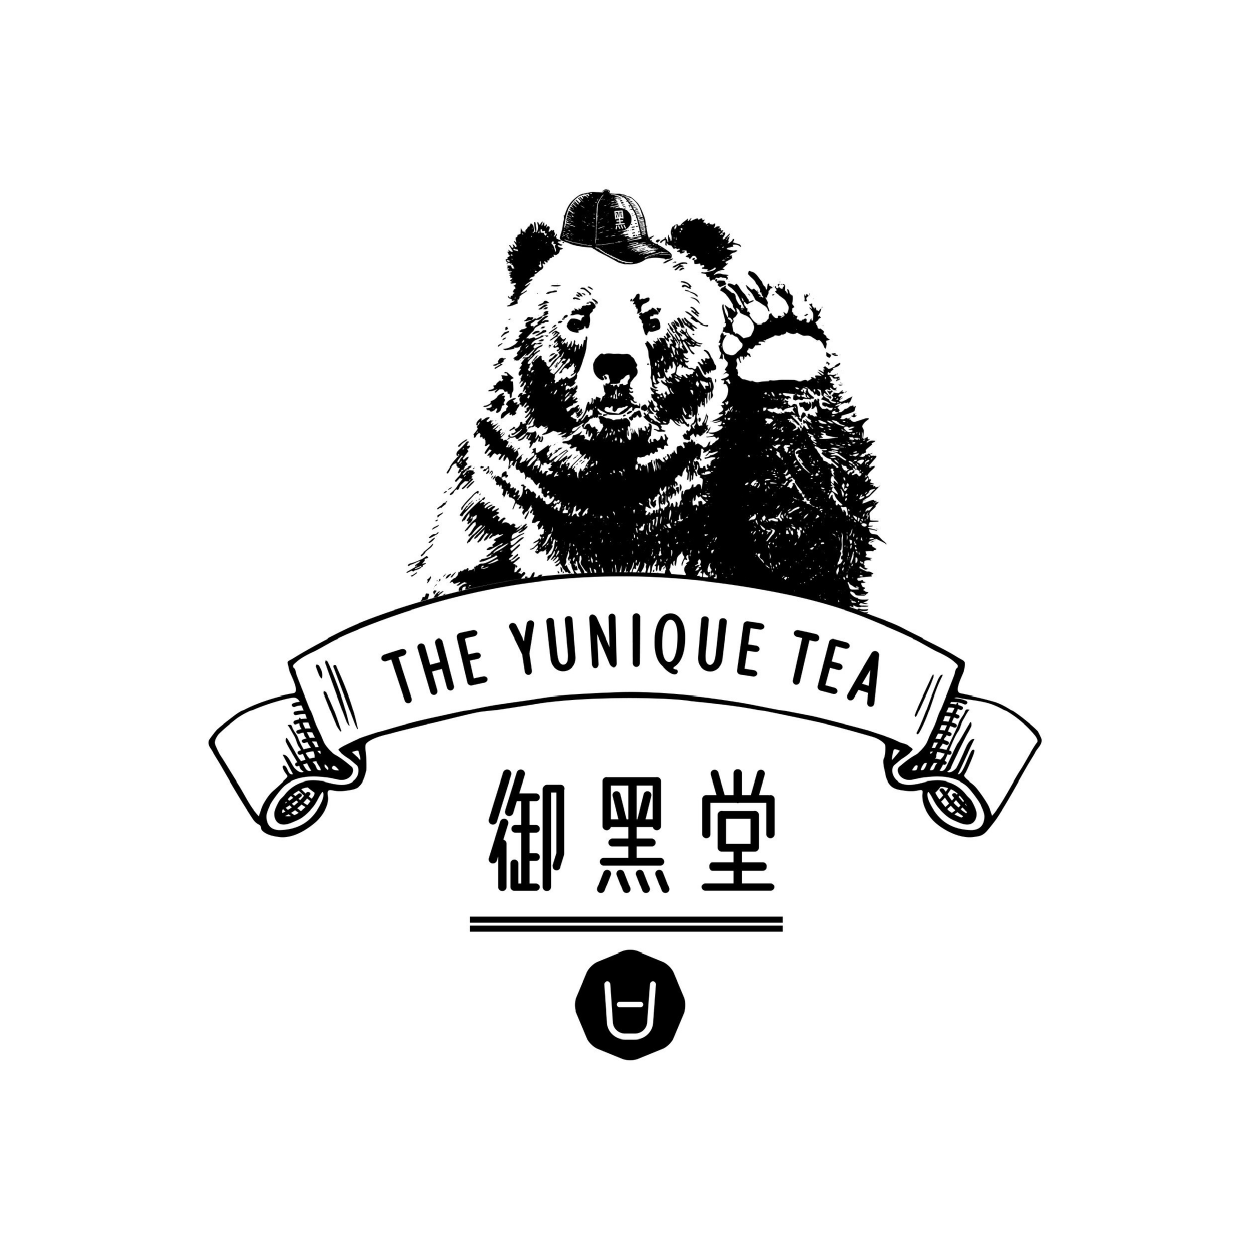 The Yunique Tea